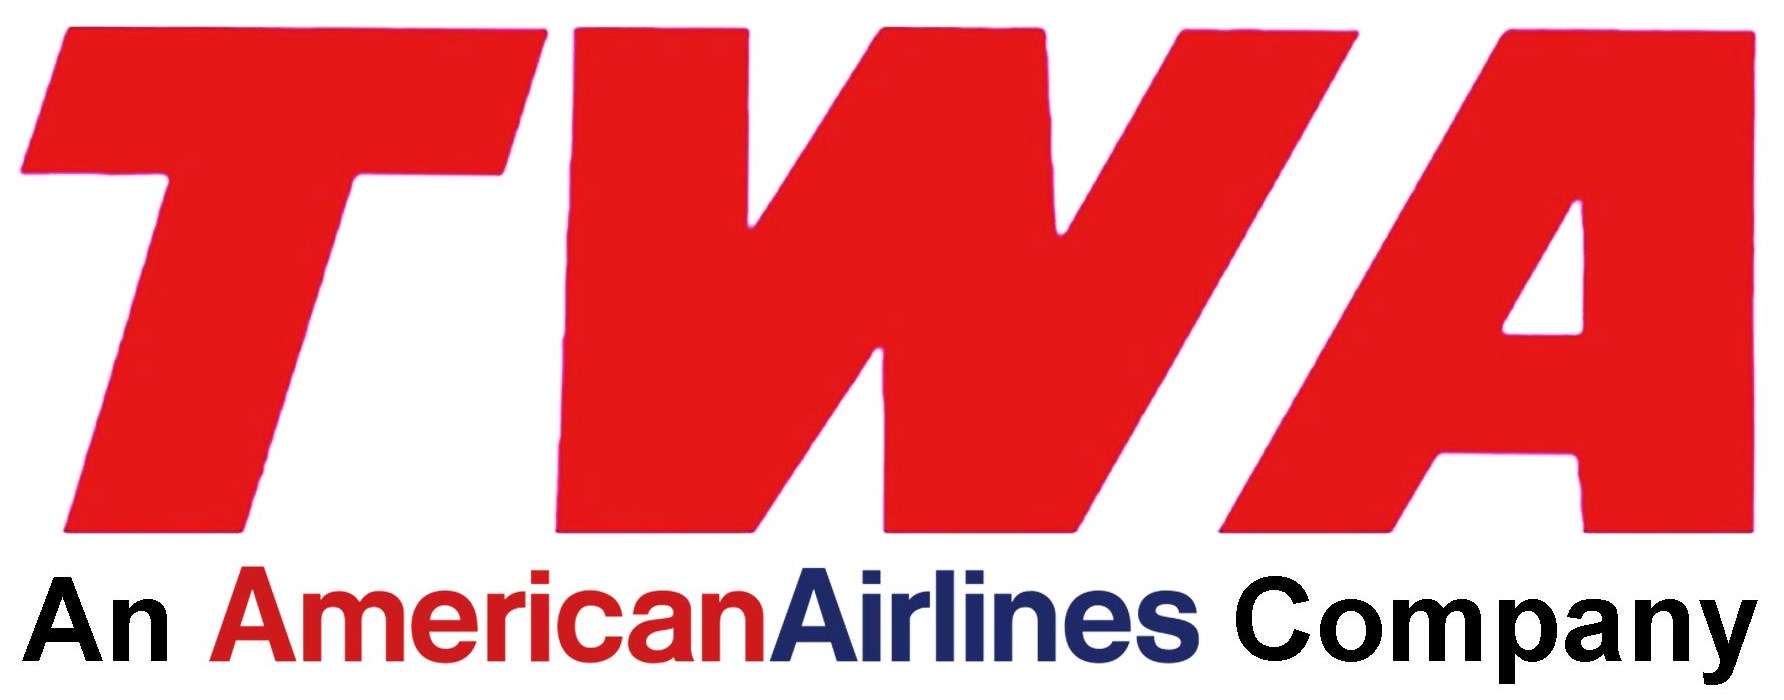 Trans World Airlines
Keywords: TWA, American